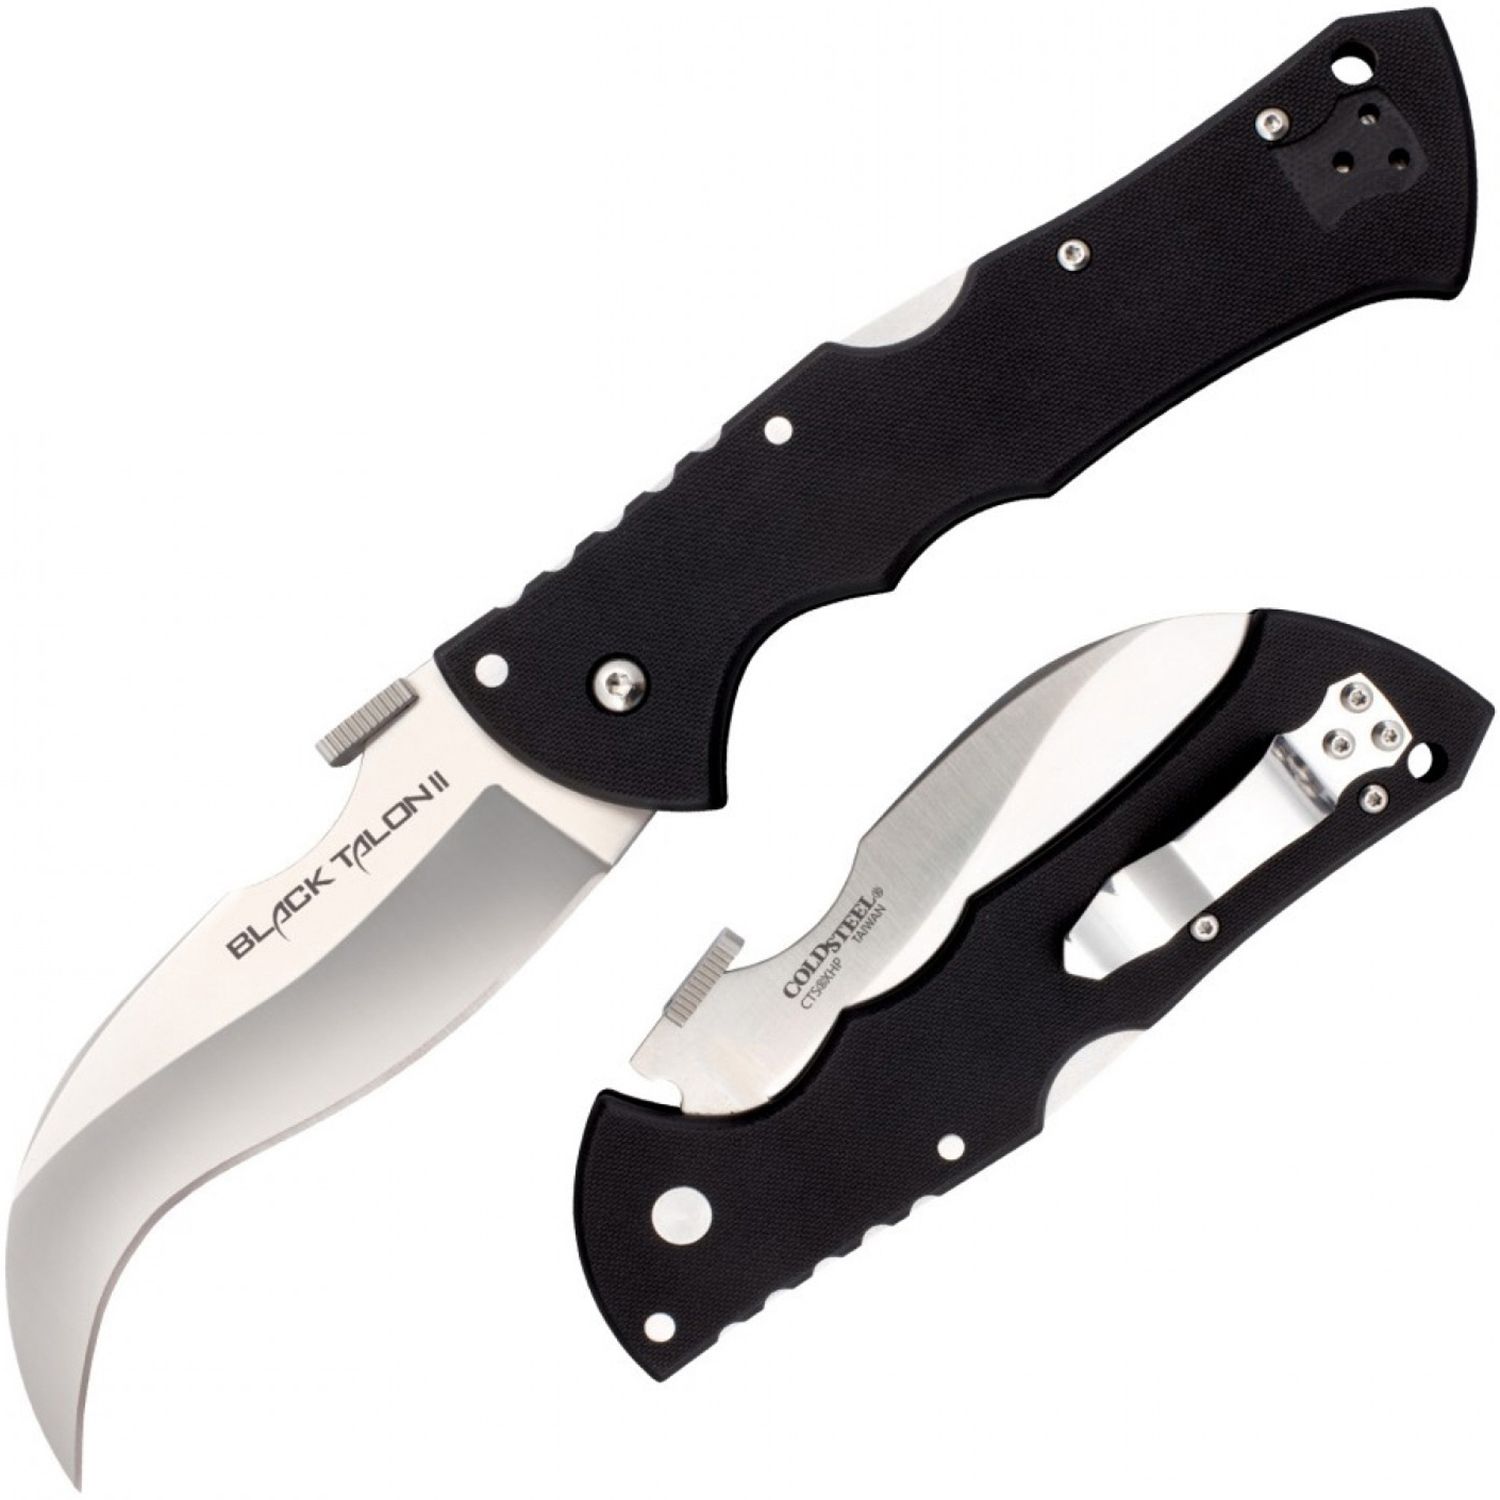 Складной нож Black Talon II - Cold Steel 22BT, сталь Carpenters CTS® XHP Alloy, рукоять G10 - фото 1